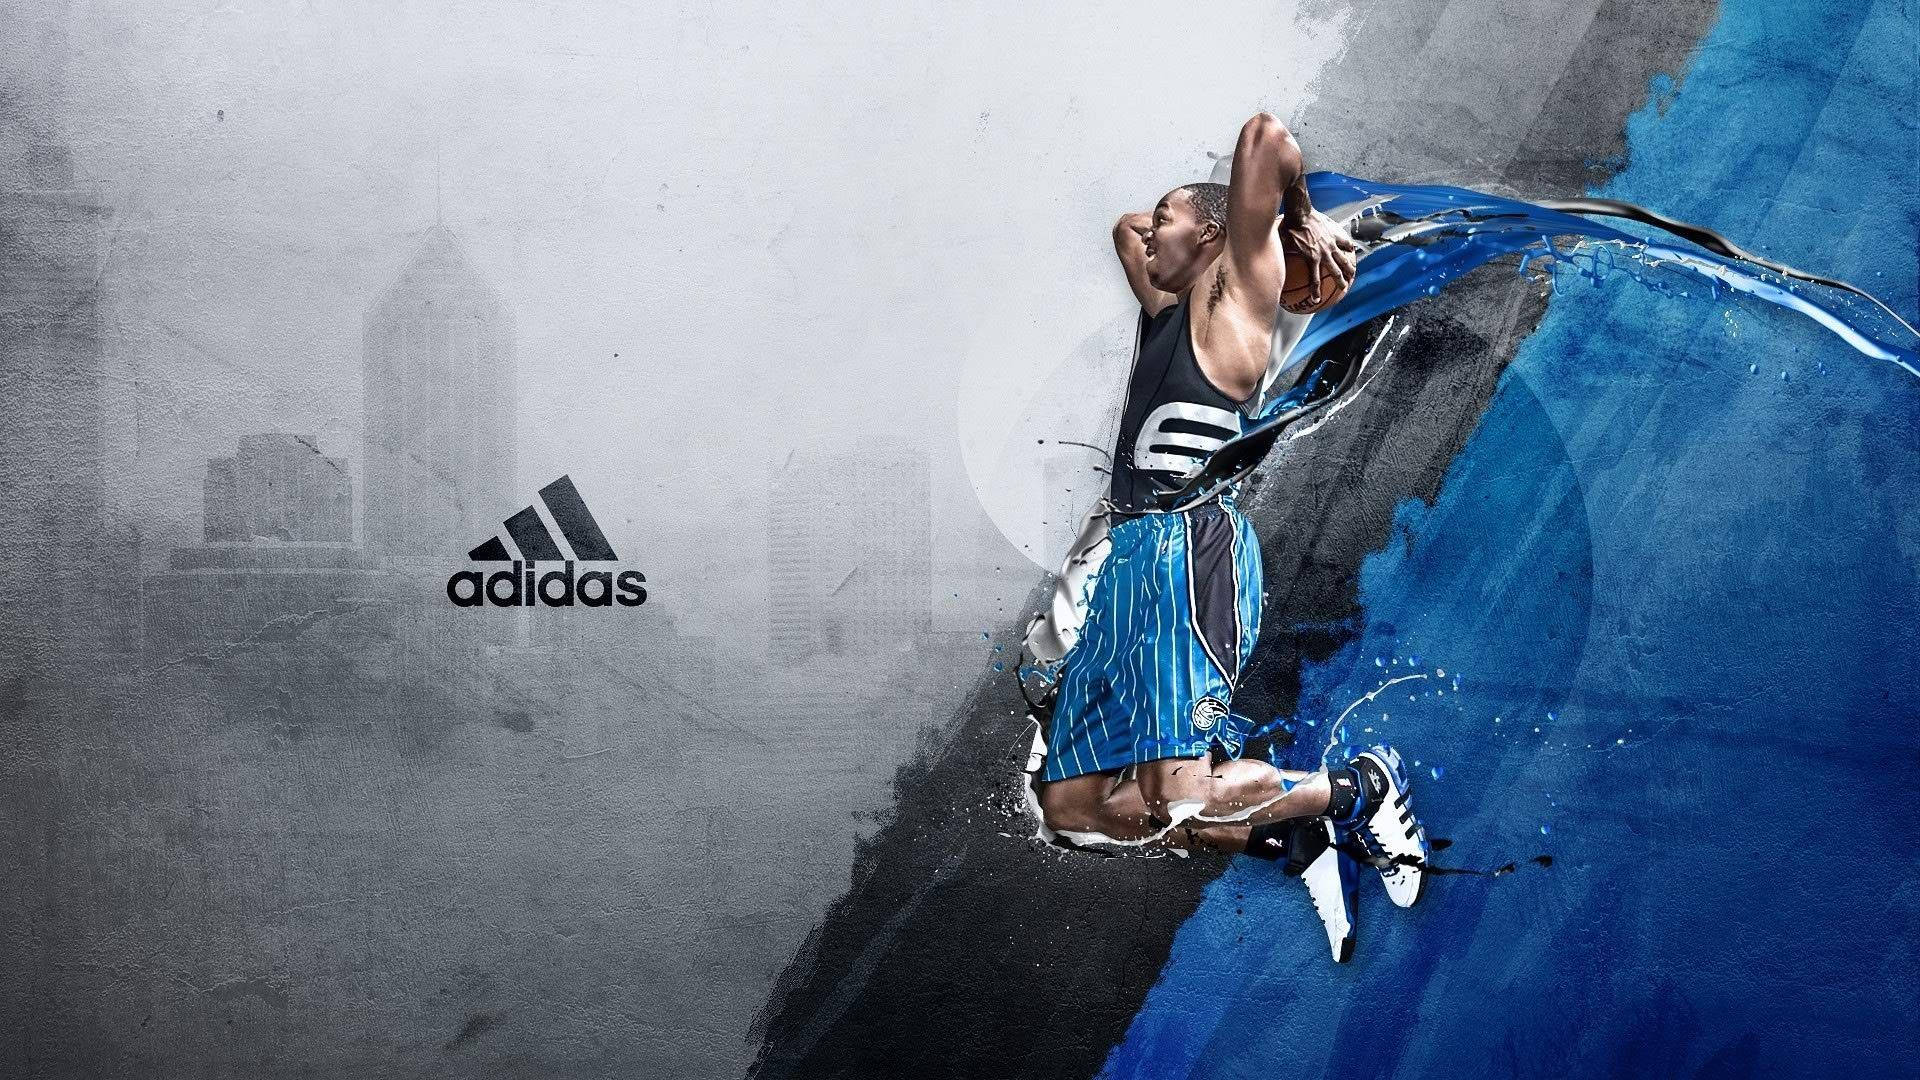 Adidas Brand Logo With Dwight Howard Background